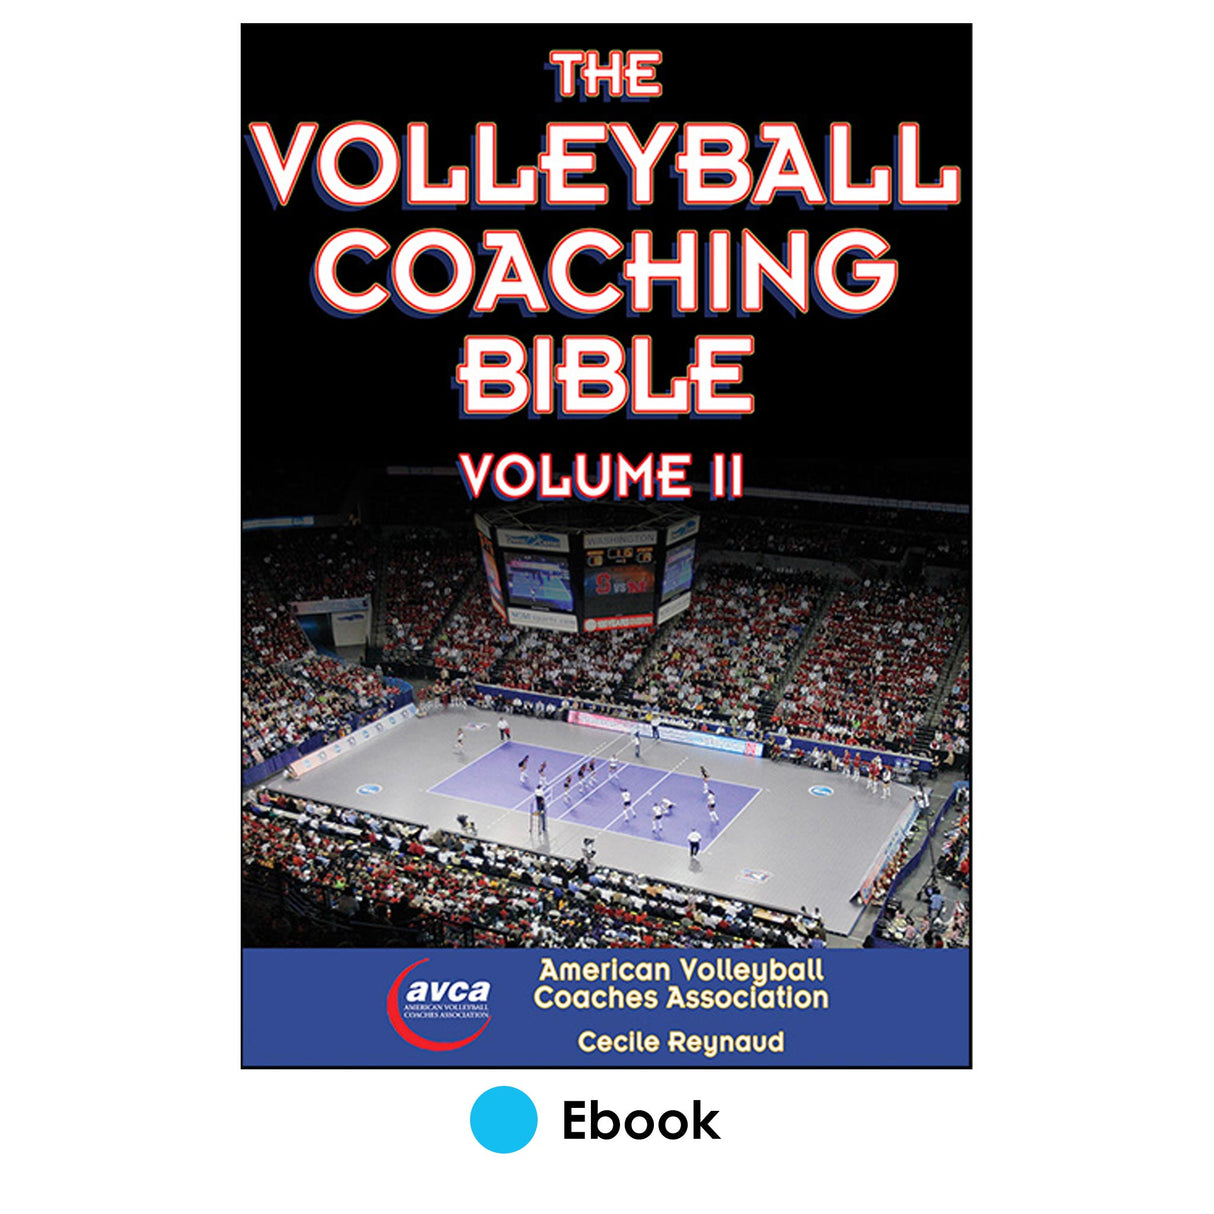 Volleyball Coaching Bible, Volume II PDF, The